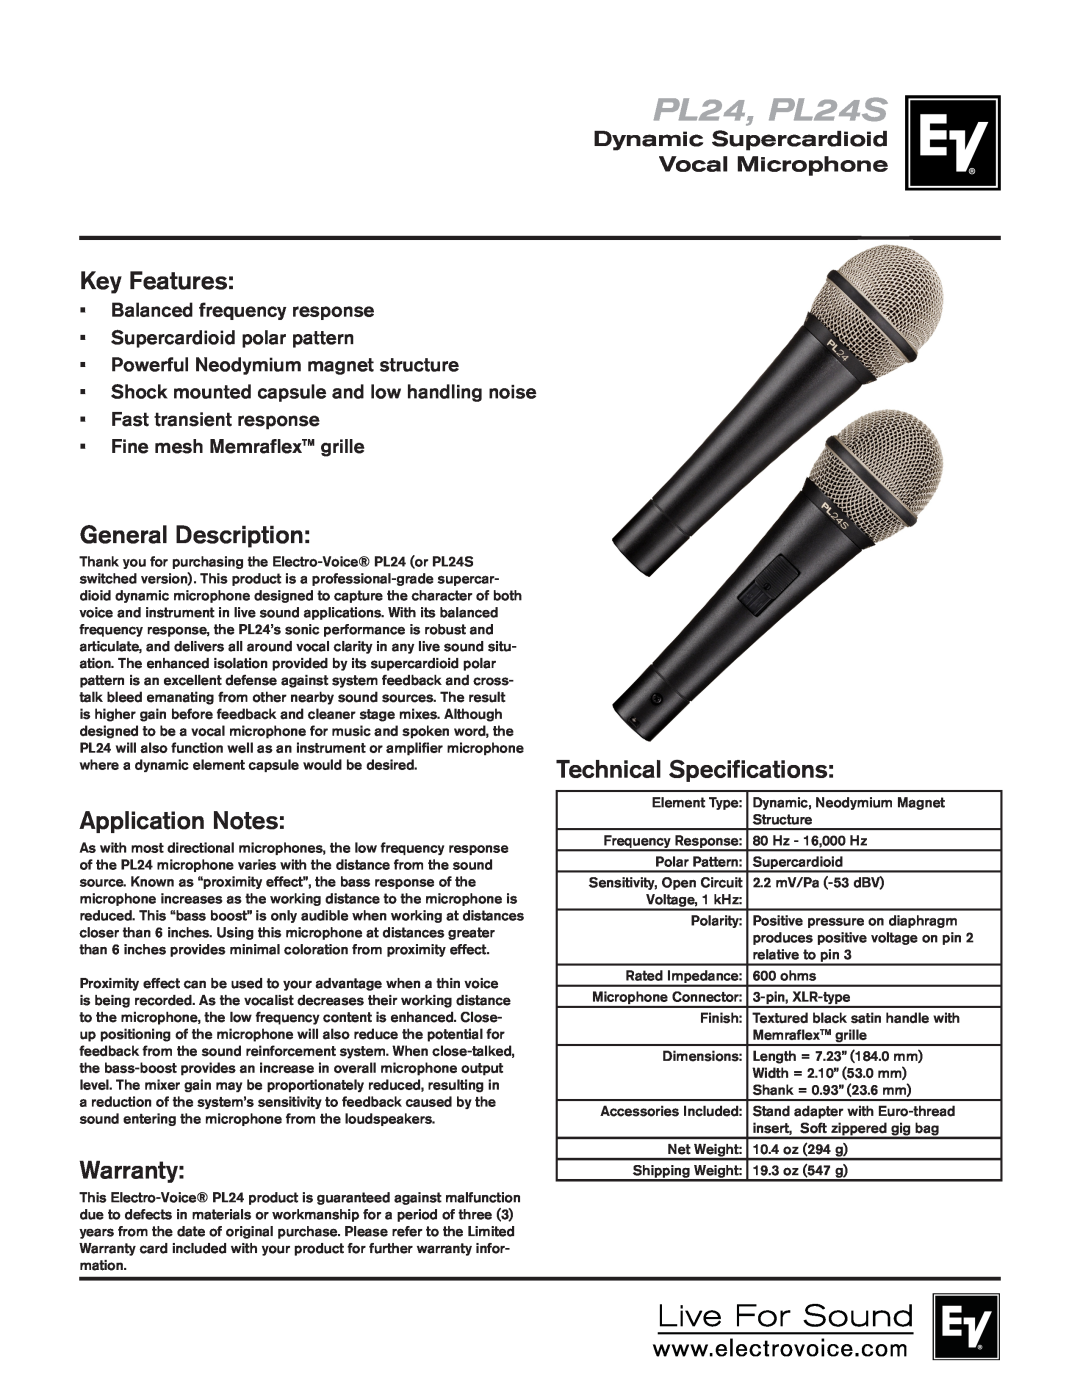 Electro-Voice technical specifications Key Features, General Description, Application Notes, Warranty, PL24, PL24S 